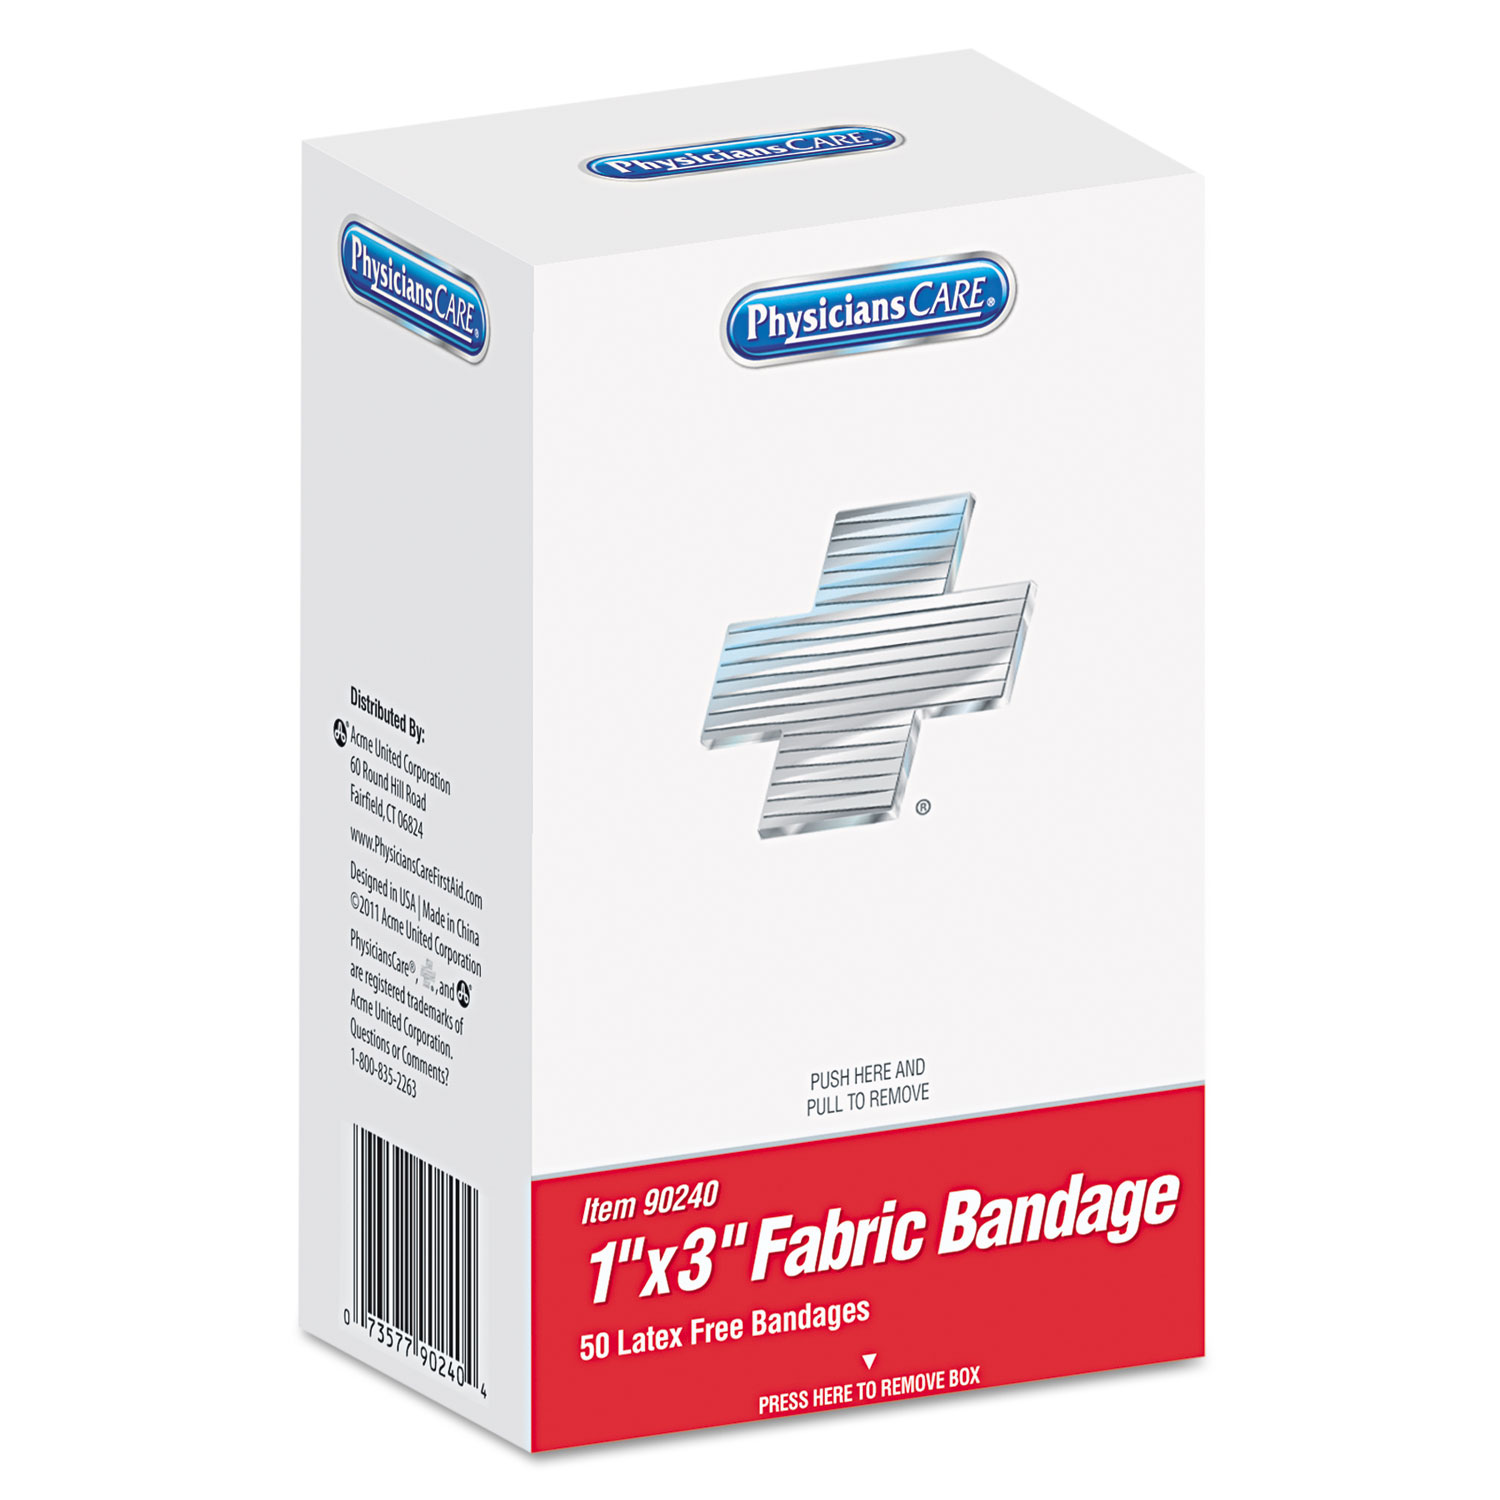 XPRESS First Aid Kit Refill, Bandages, 1 x 3 Fabric, 50/Box